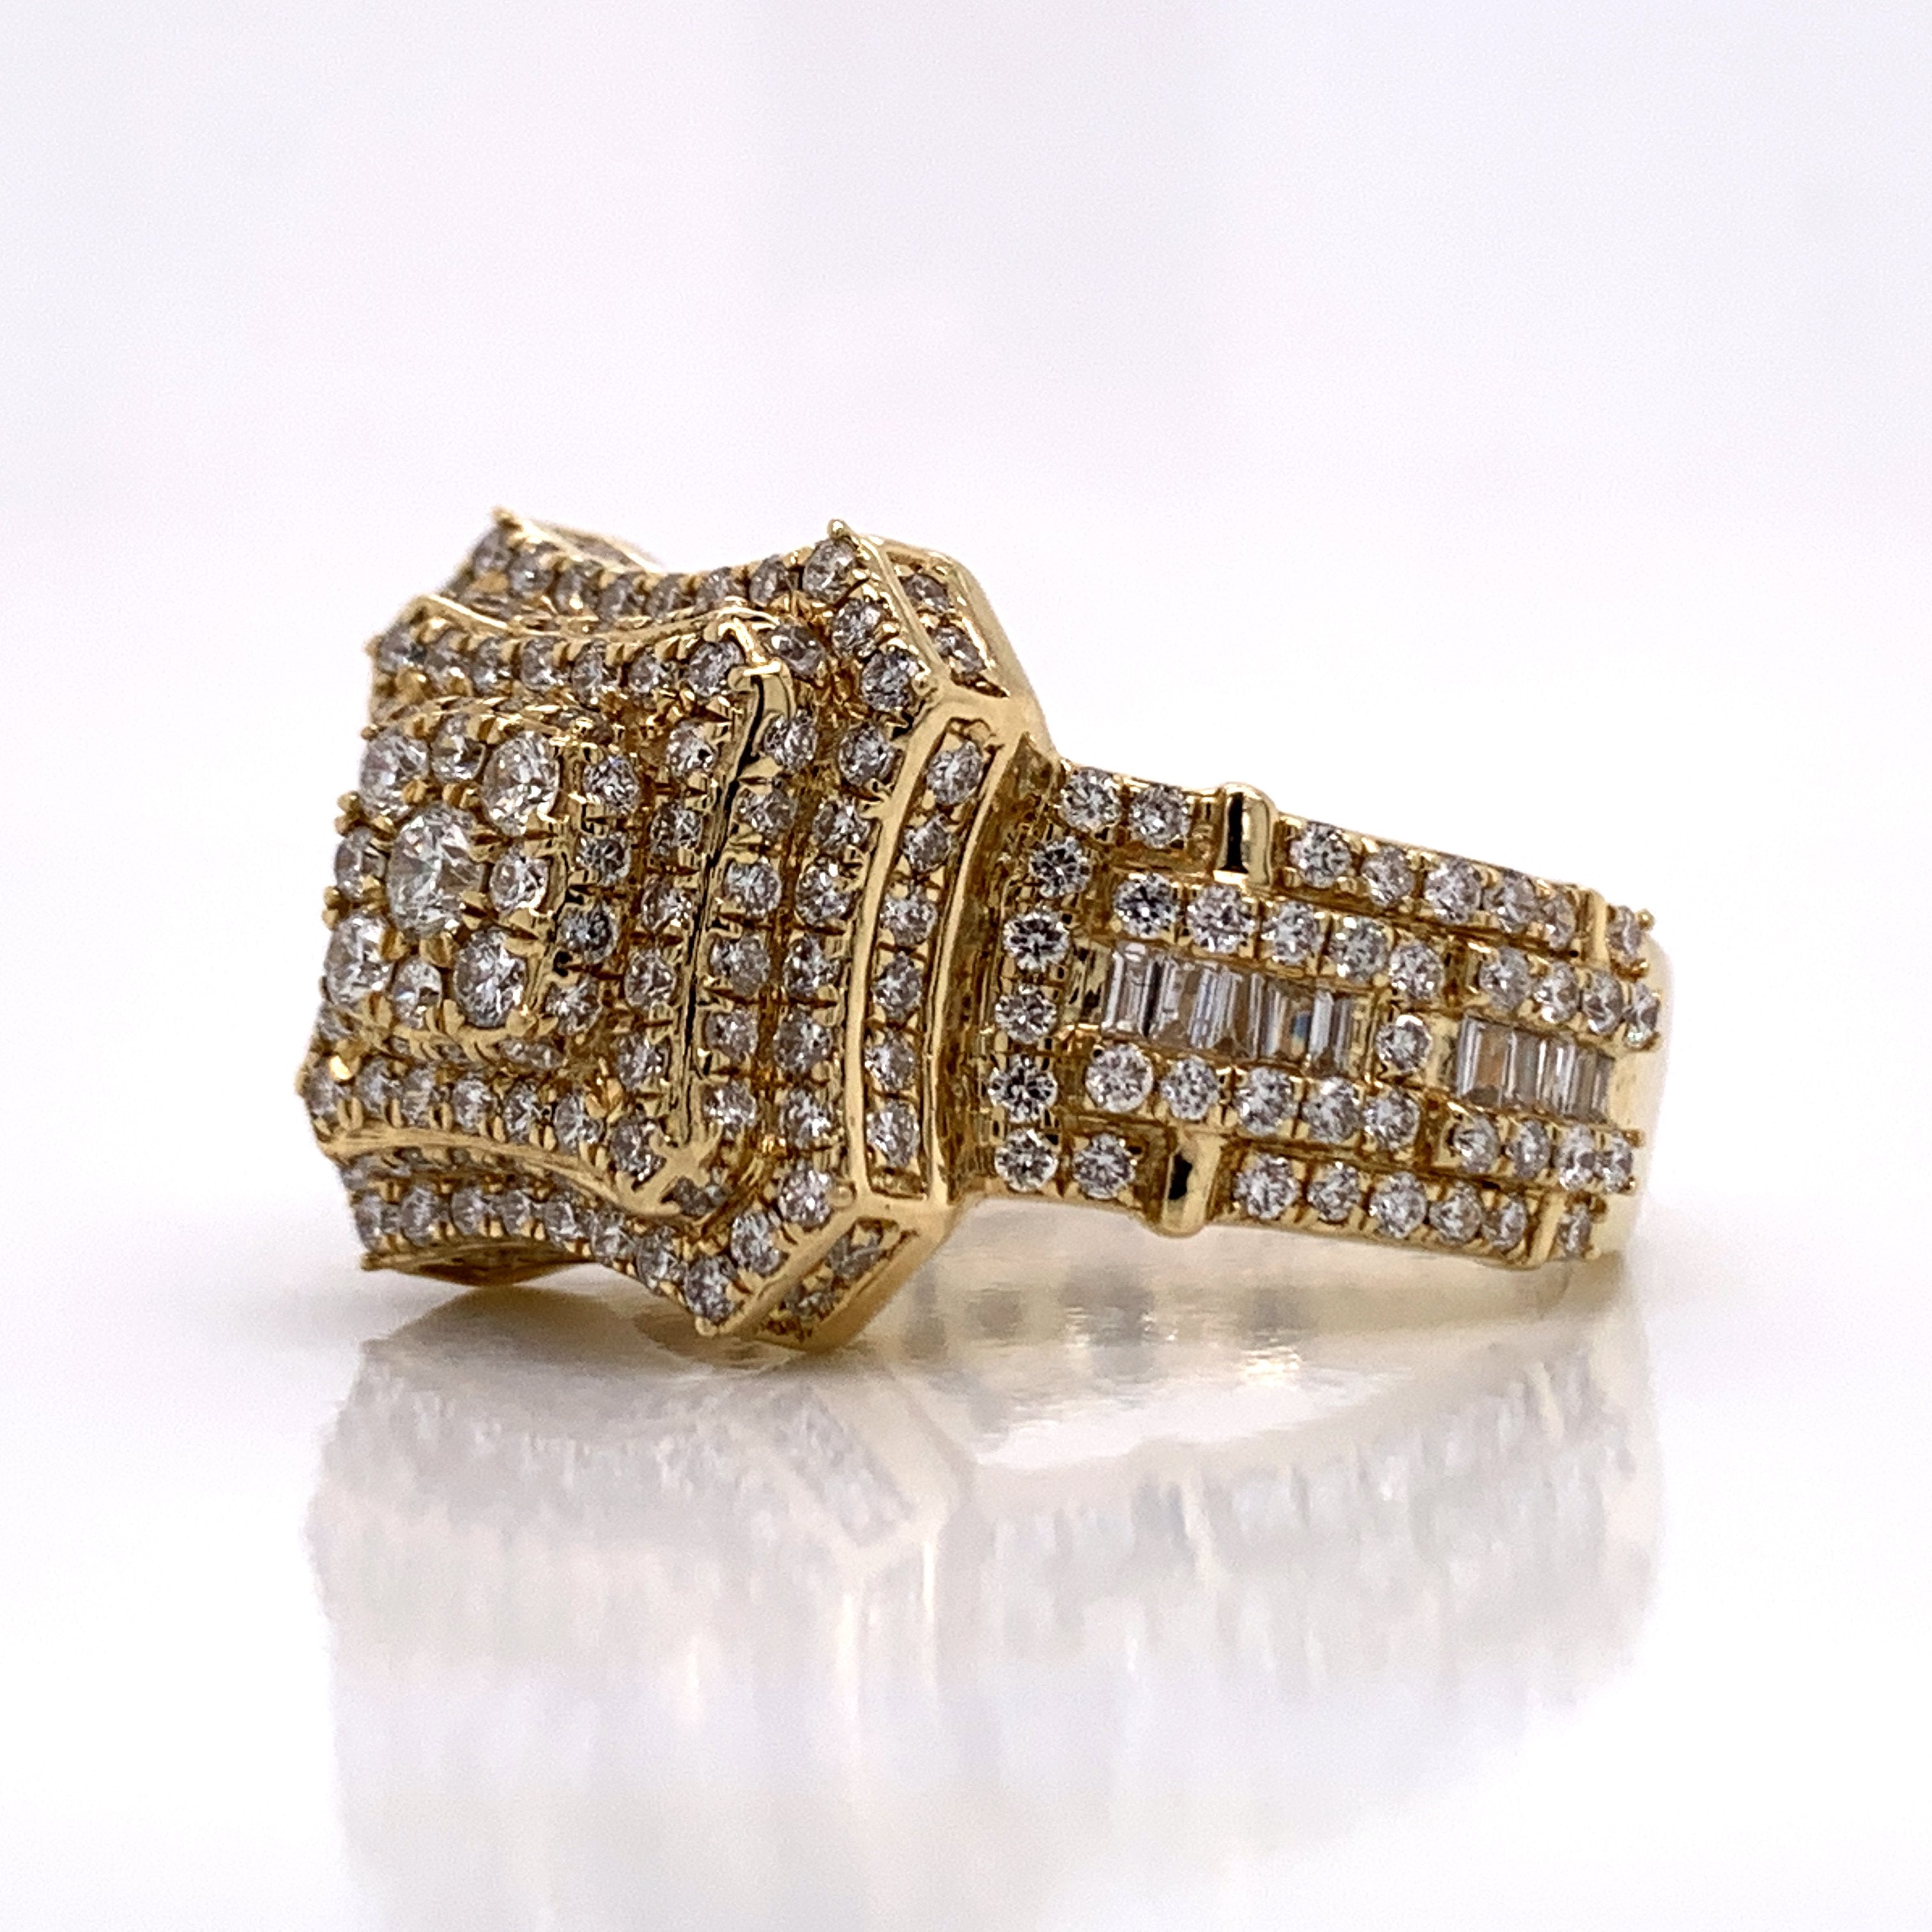 2.26CT Diamond Ring in 10K Gold - White Carat Diamonds 